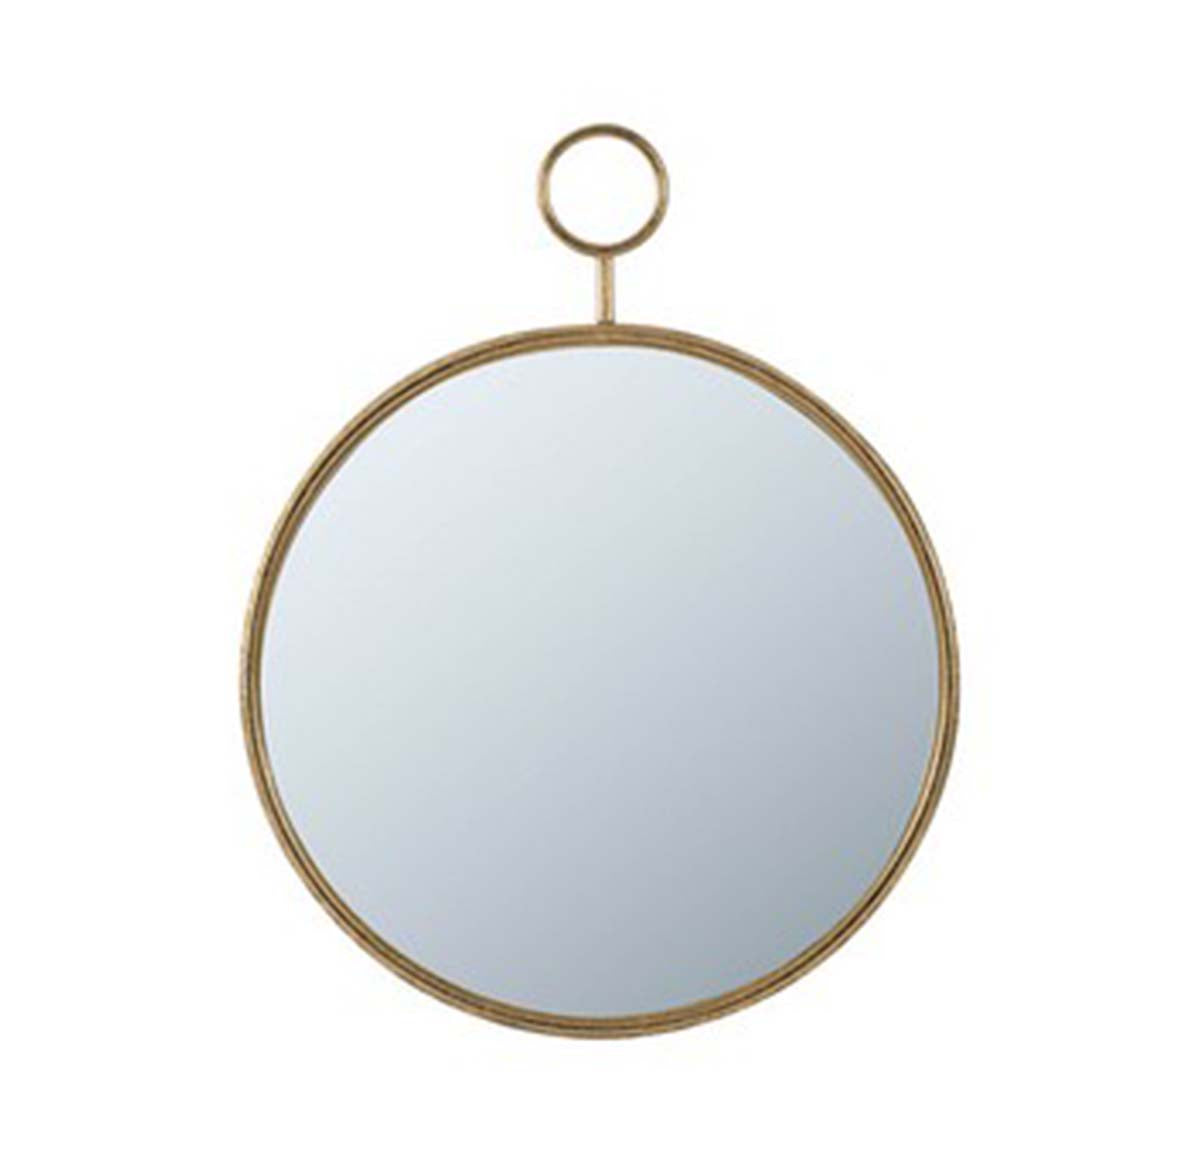 22" Elegance Round Wall Hanging Mirror - Gold